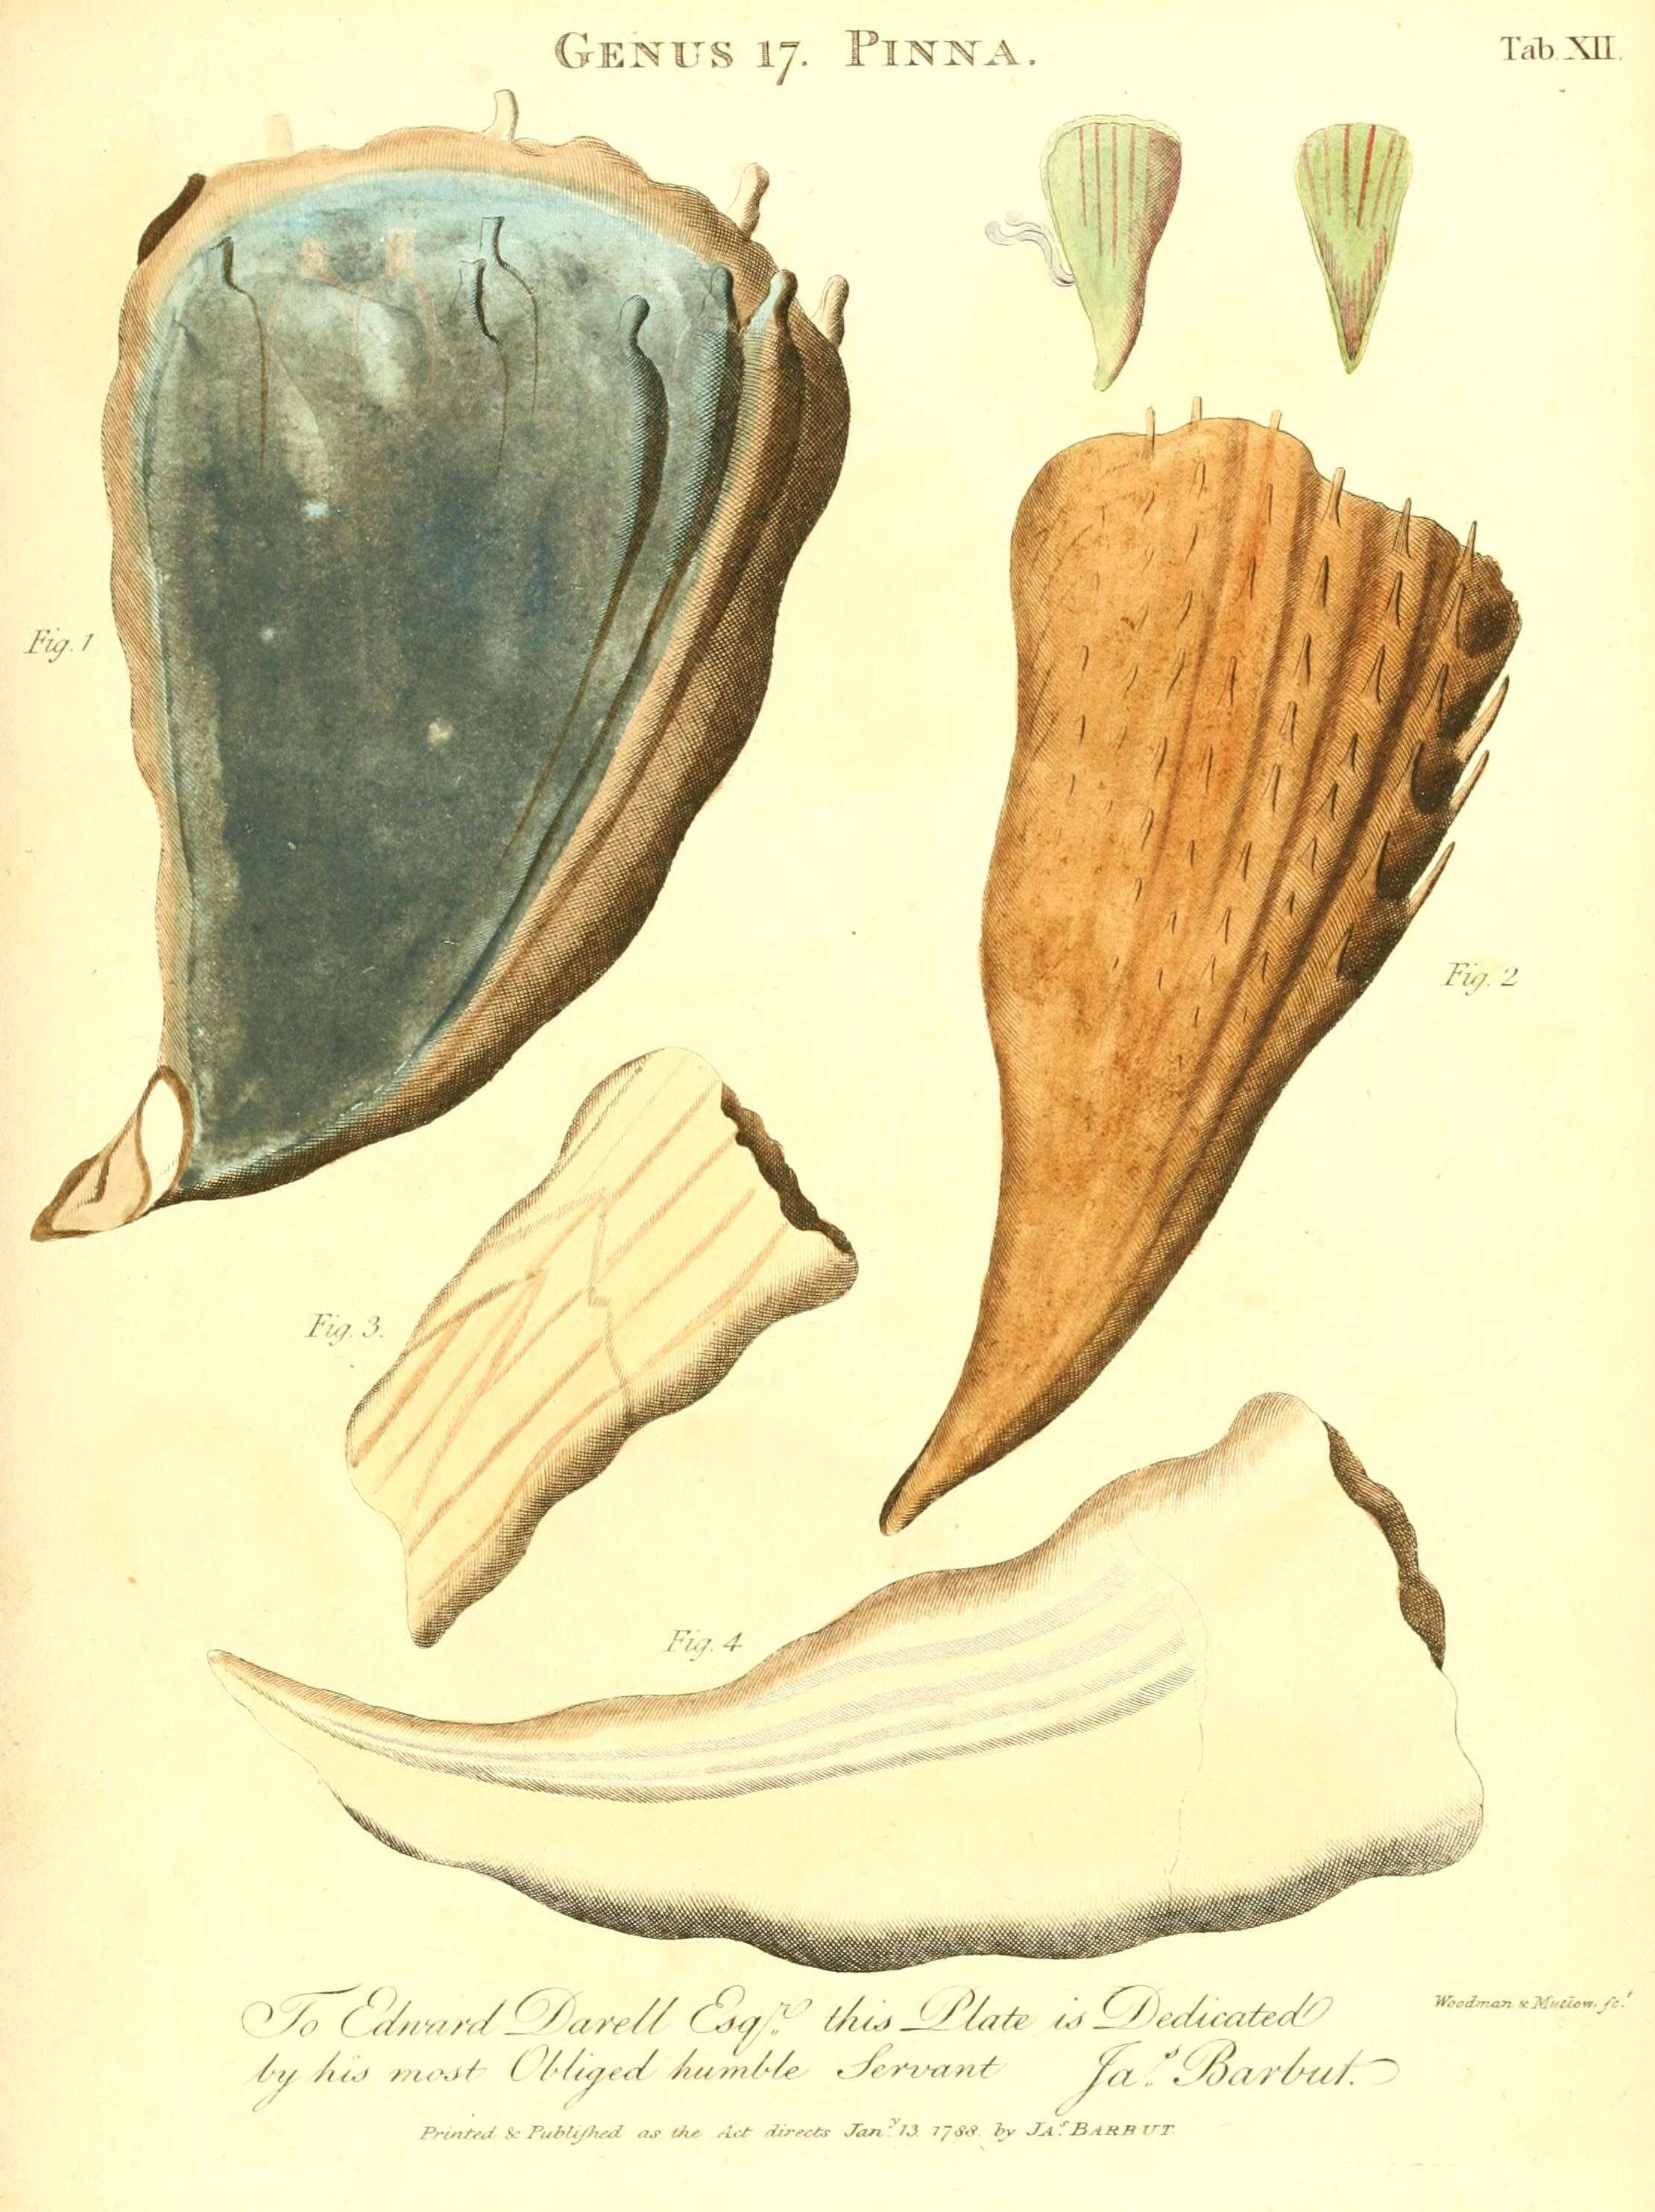 Plancia ëd Pinna rudis Linnaeus 1758